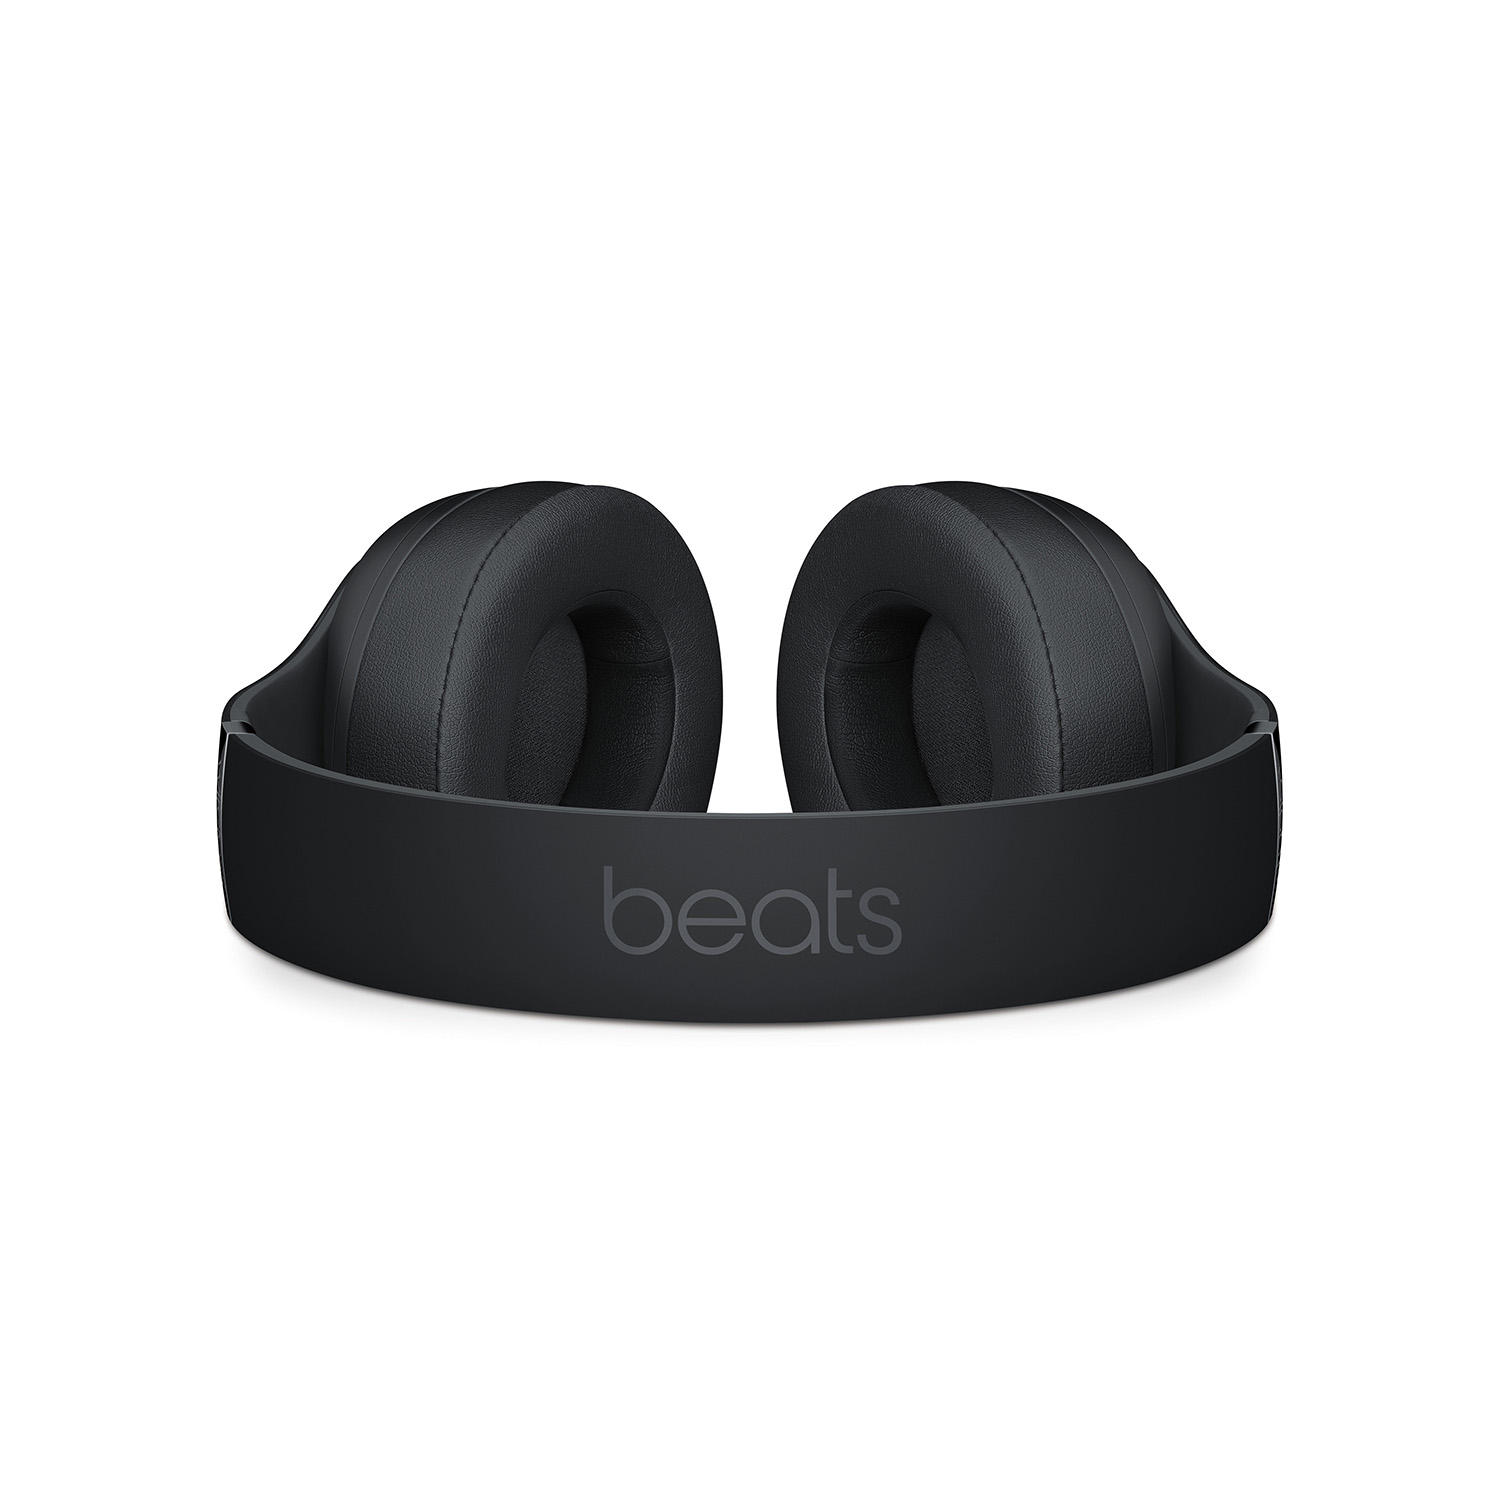 Beats Studio 3 (MX3X2LL/A) Wireless Noise Canceling Headphones